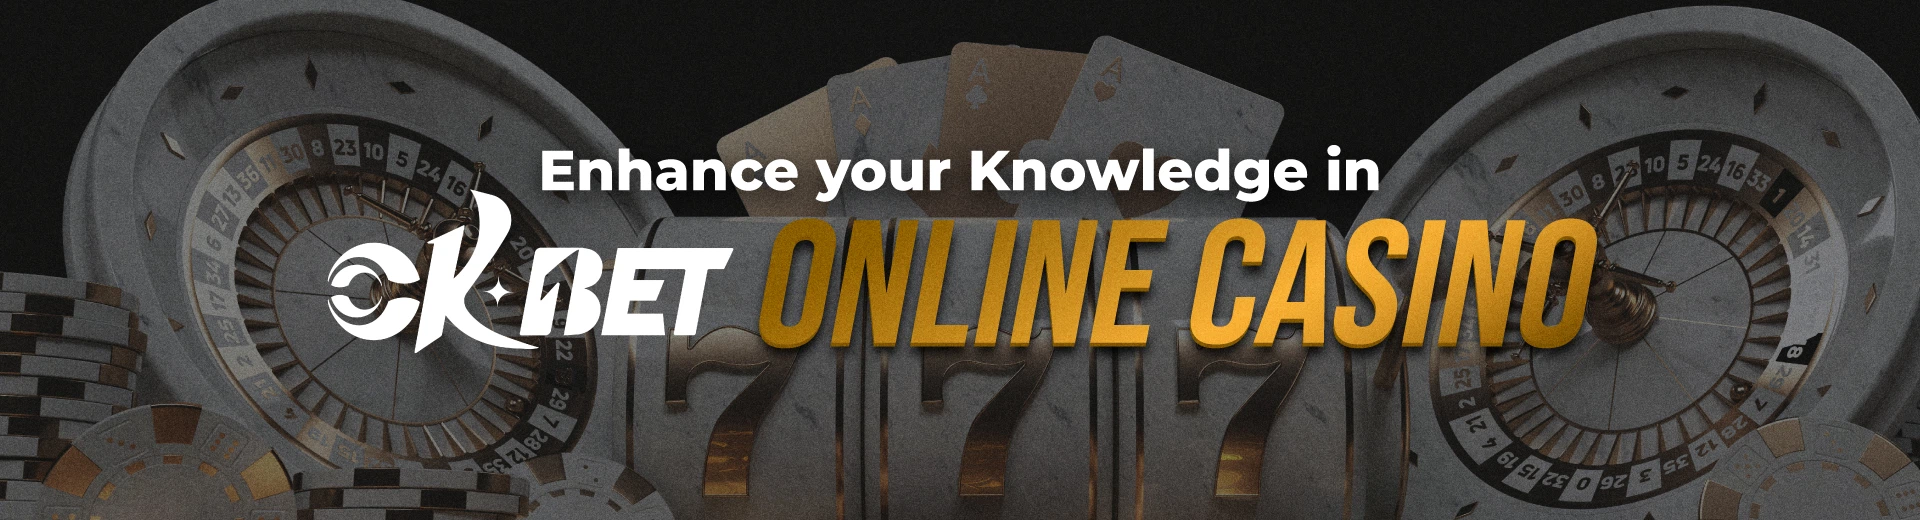 A Guide To Enhance Your Knowledge In OKBET Online Casino - OKBET online casino